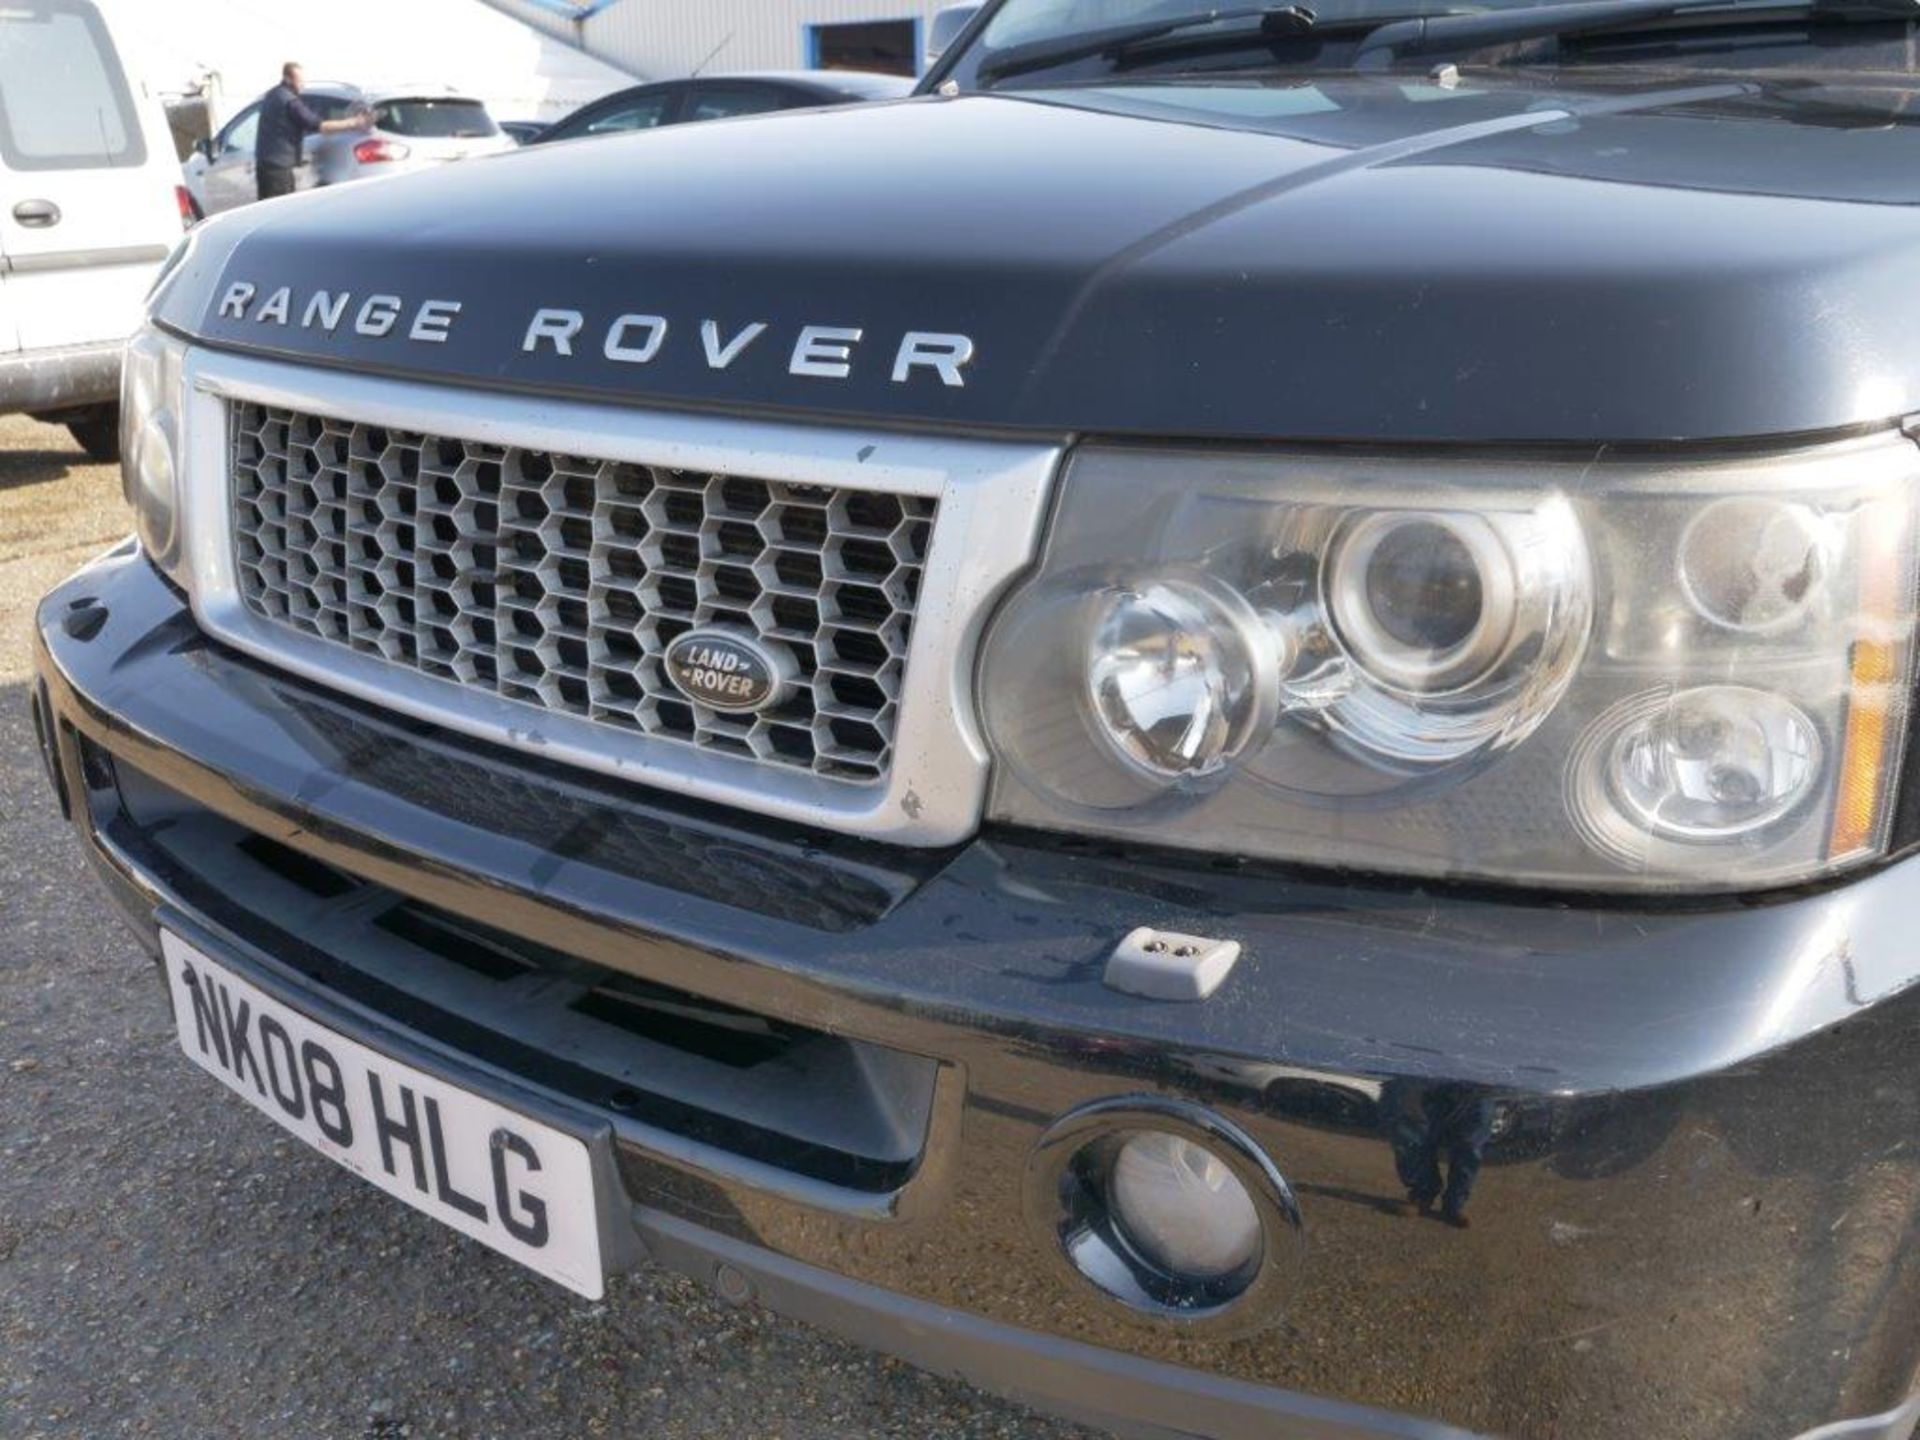 08 08 Range Rover - Image 3 of 39